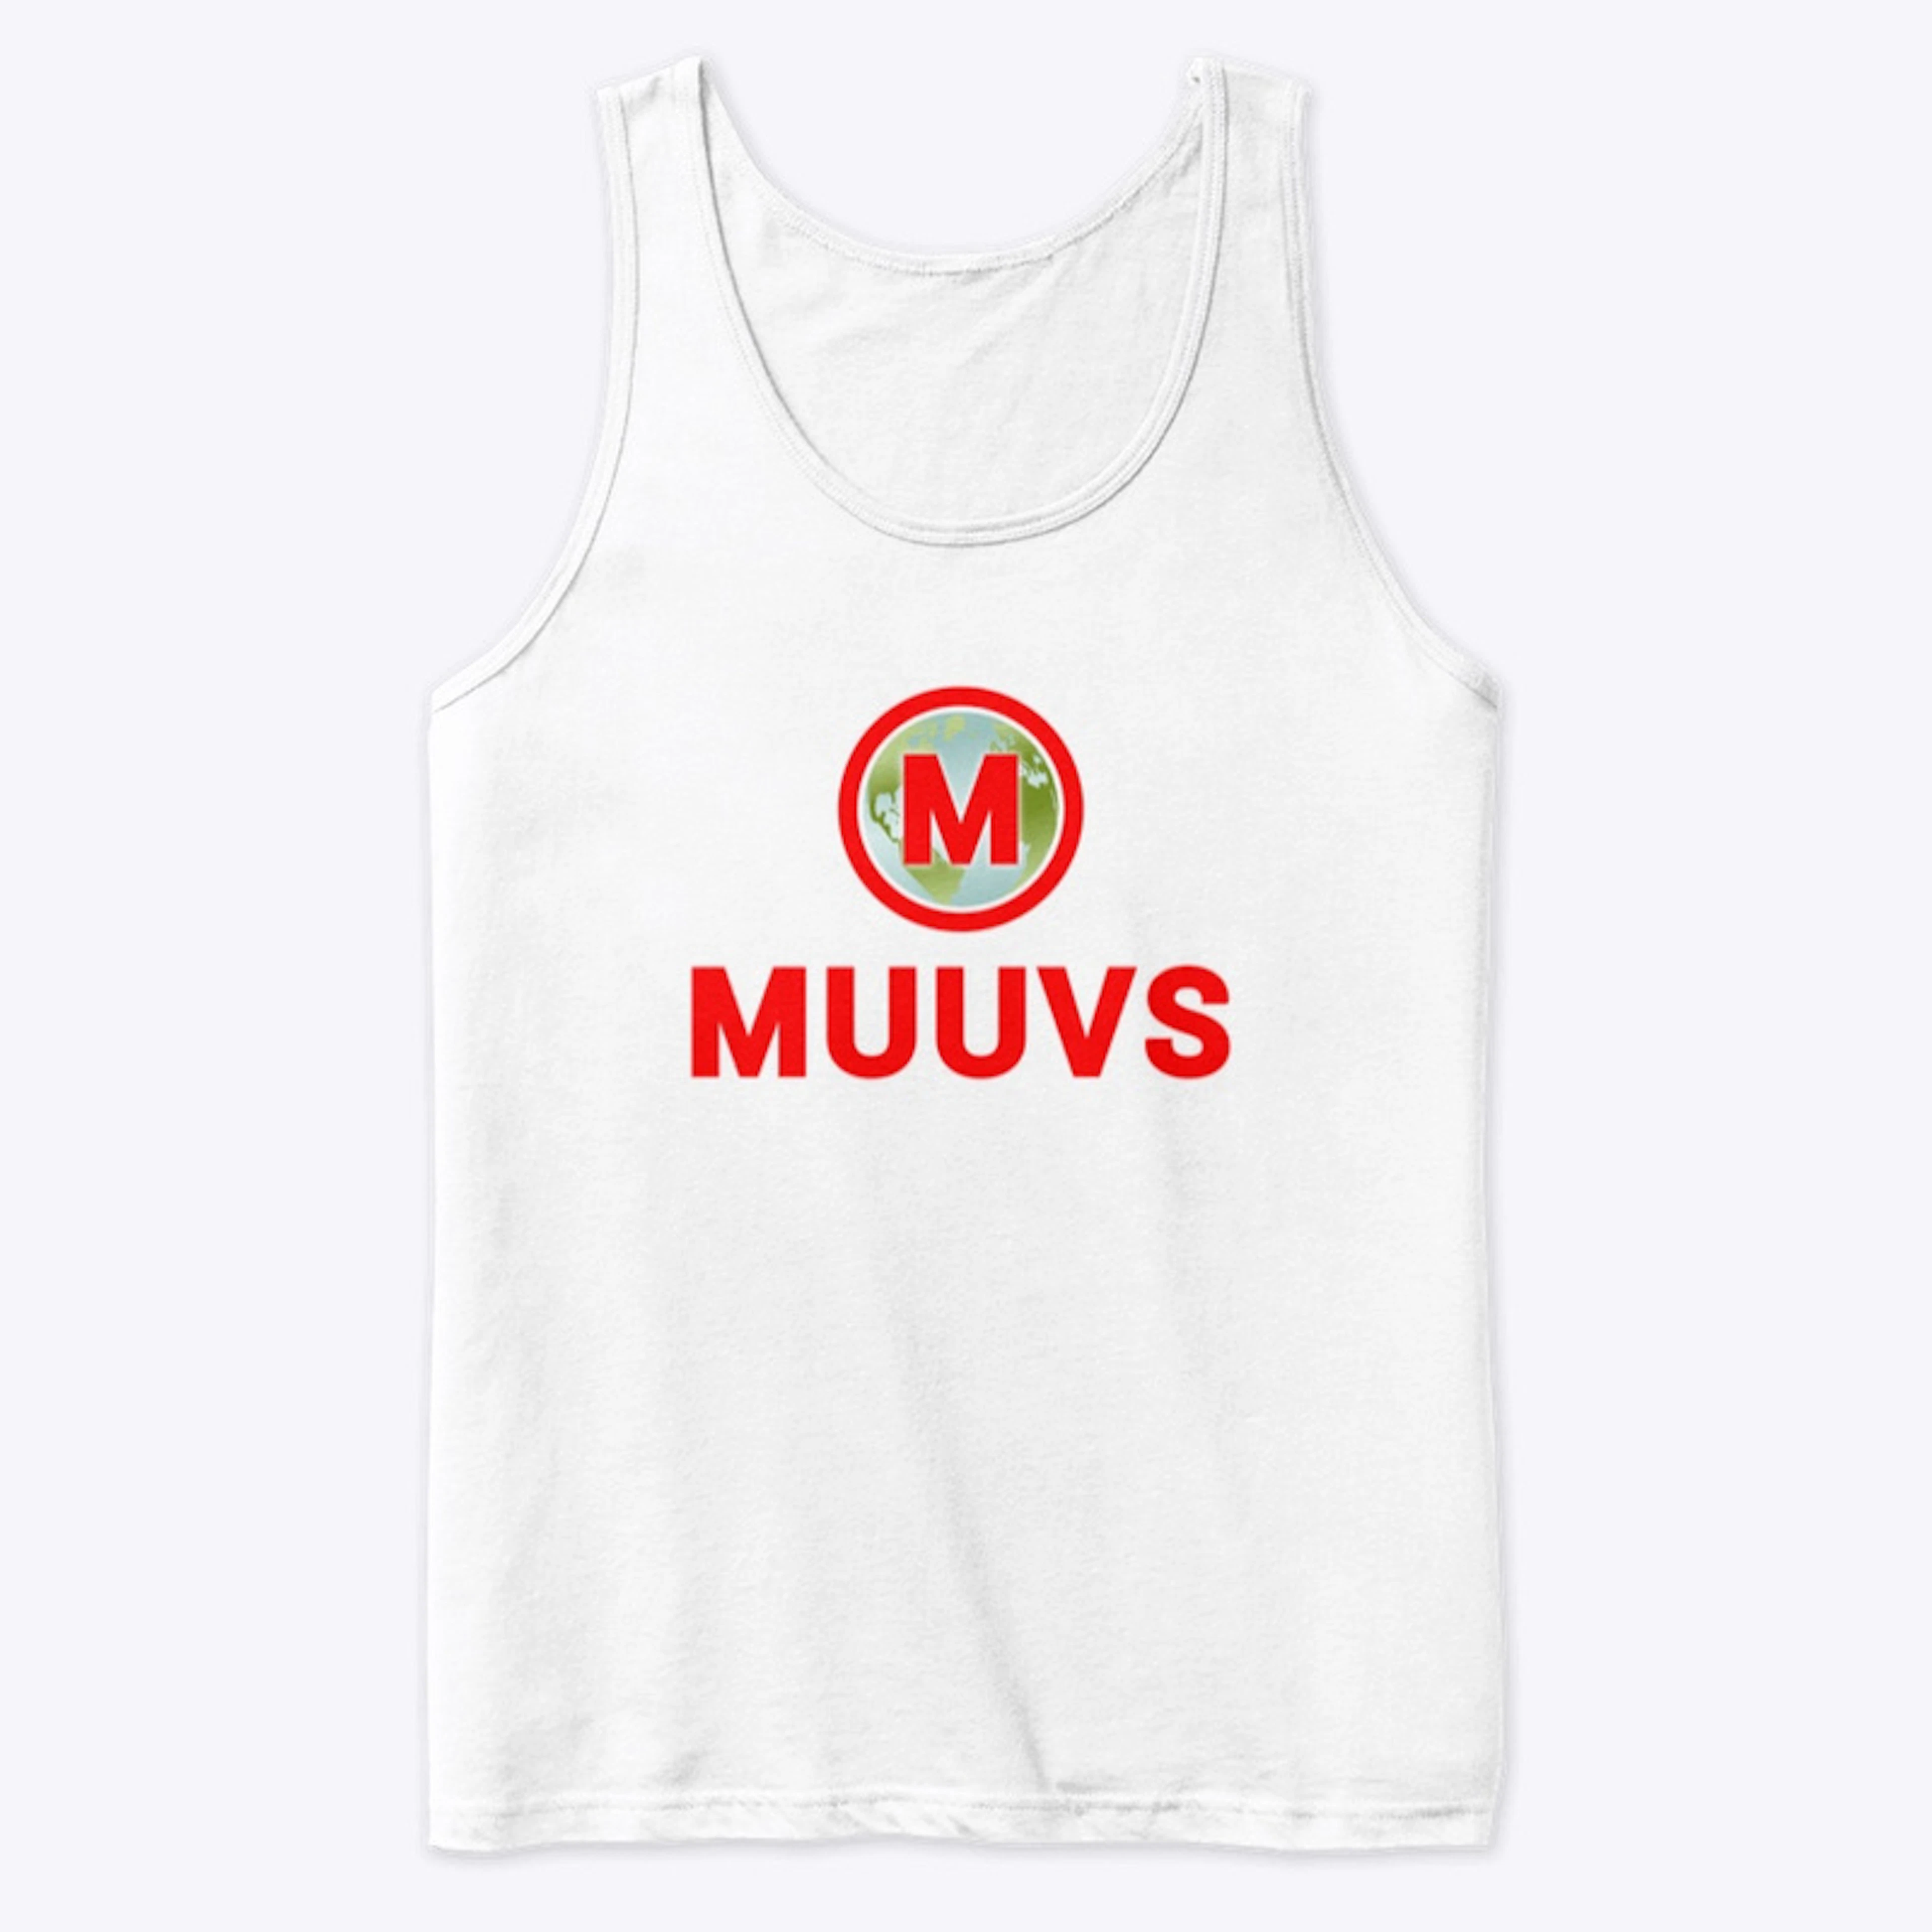 MUUVS Tank (red logo)